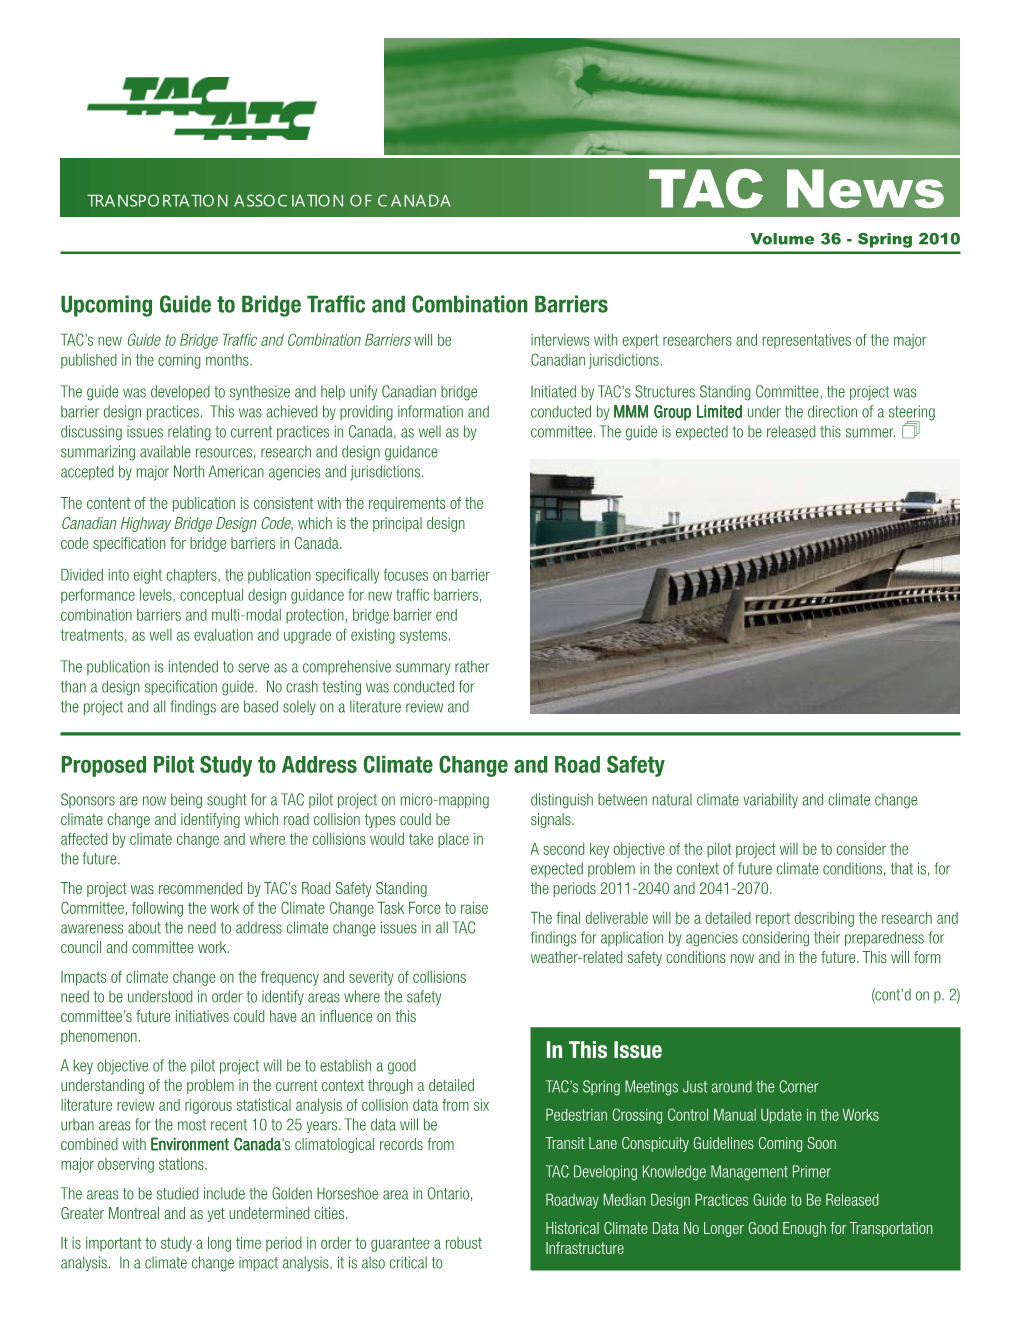 TAC News Volume 36 - Spring 2010